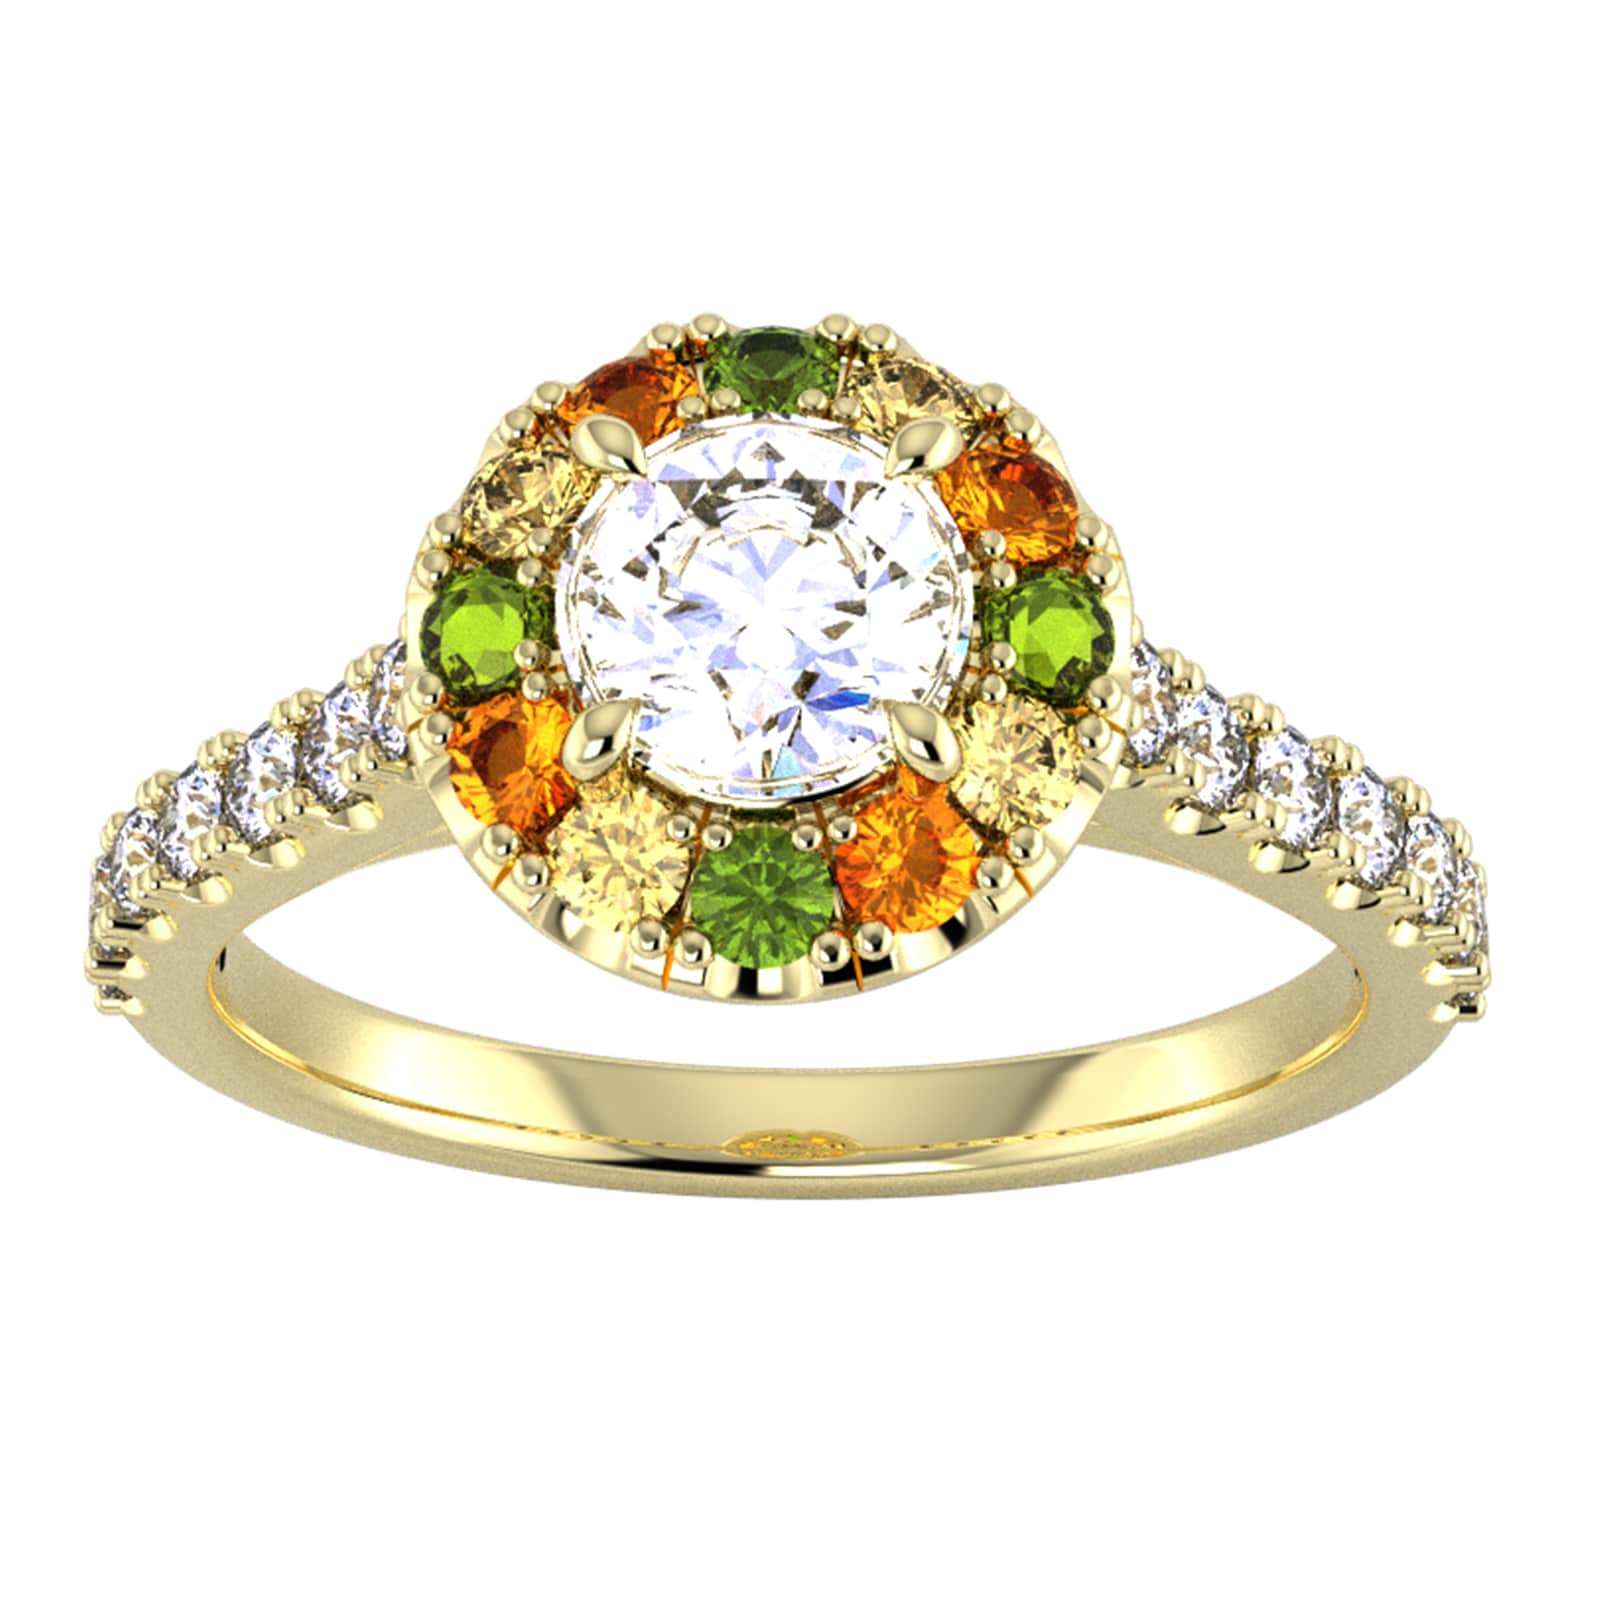 9ct Yellow Gold Diamond & Yellow, Orange, Green Sapphire Halo Ring - Ring Size G.5